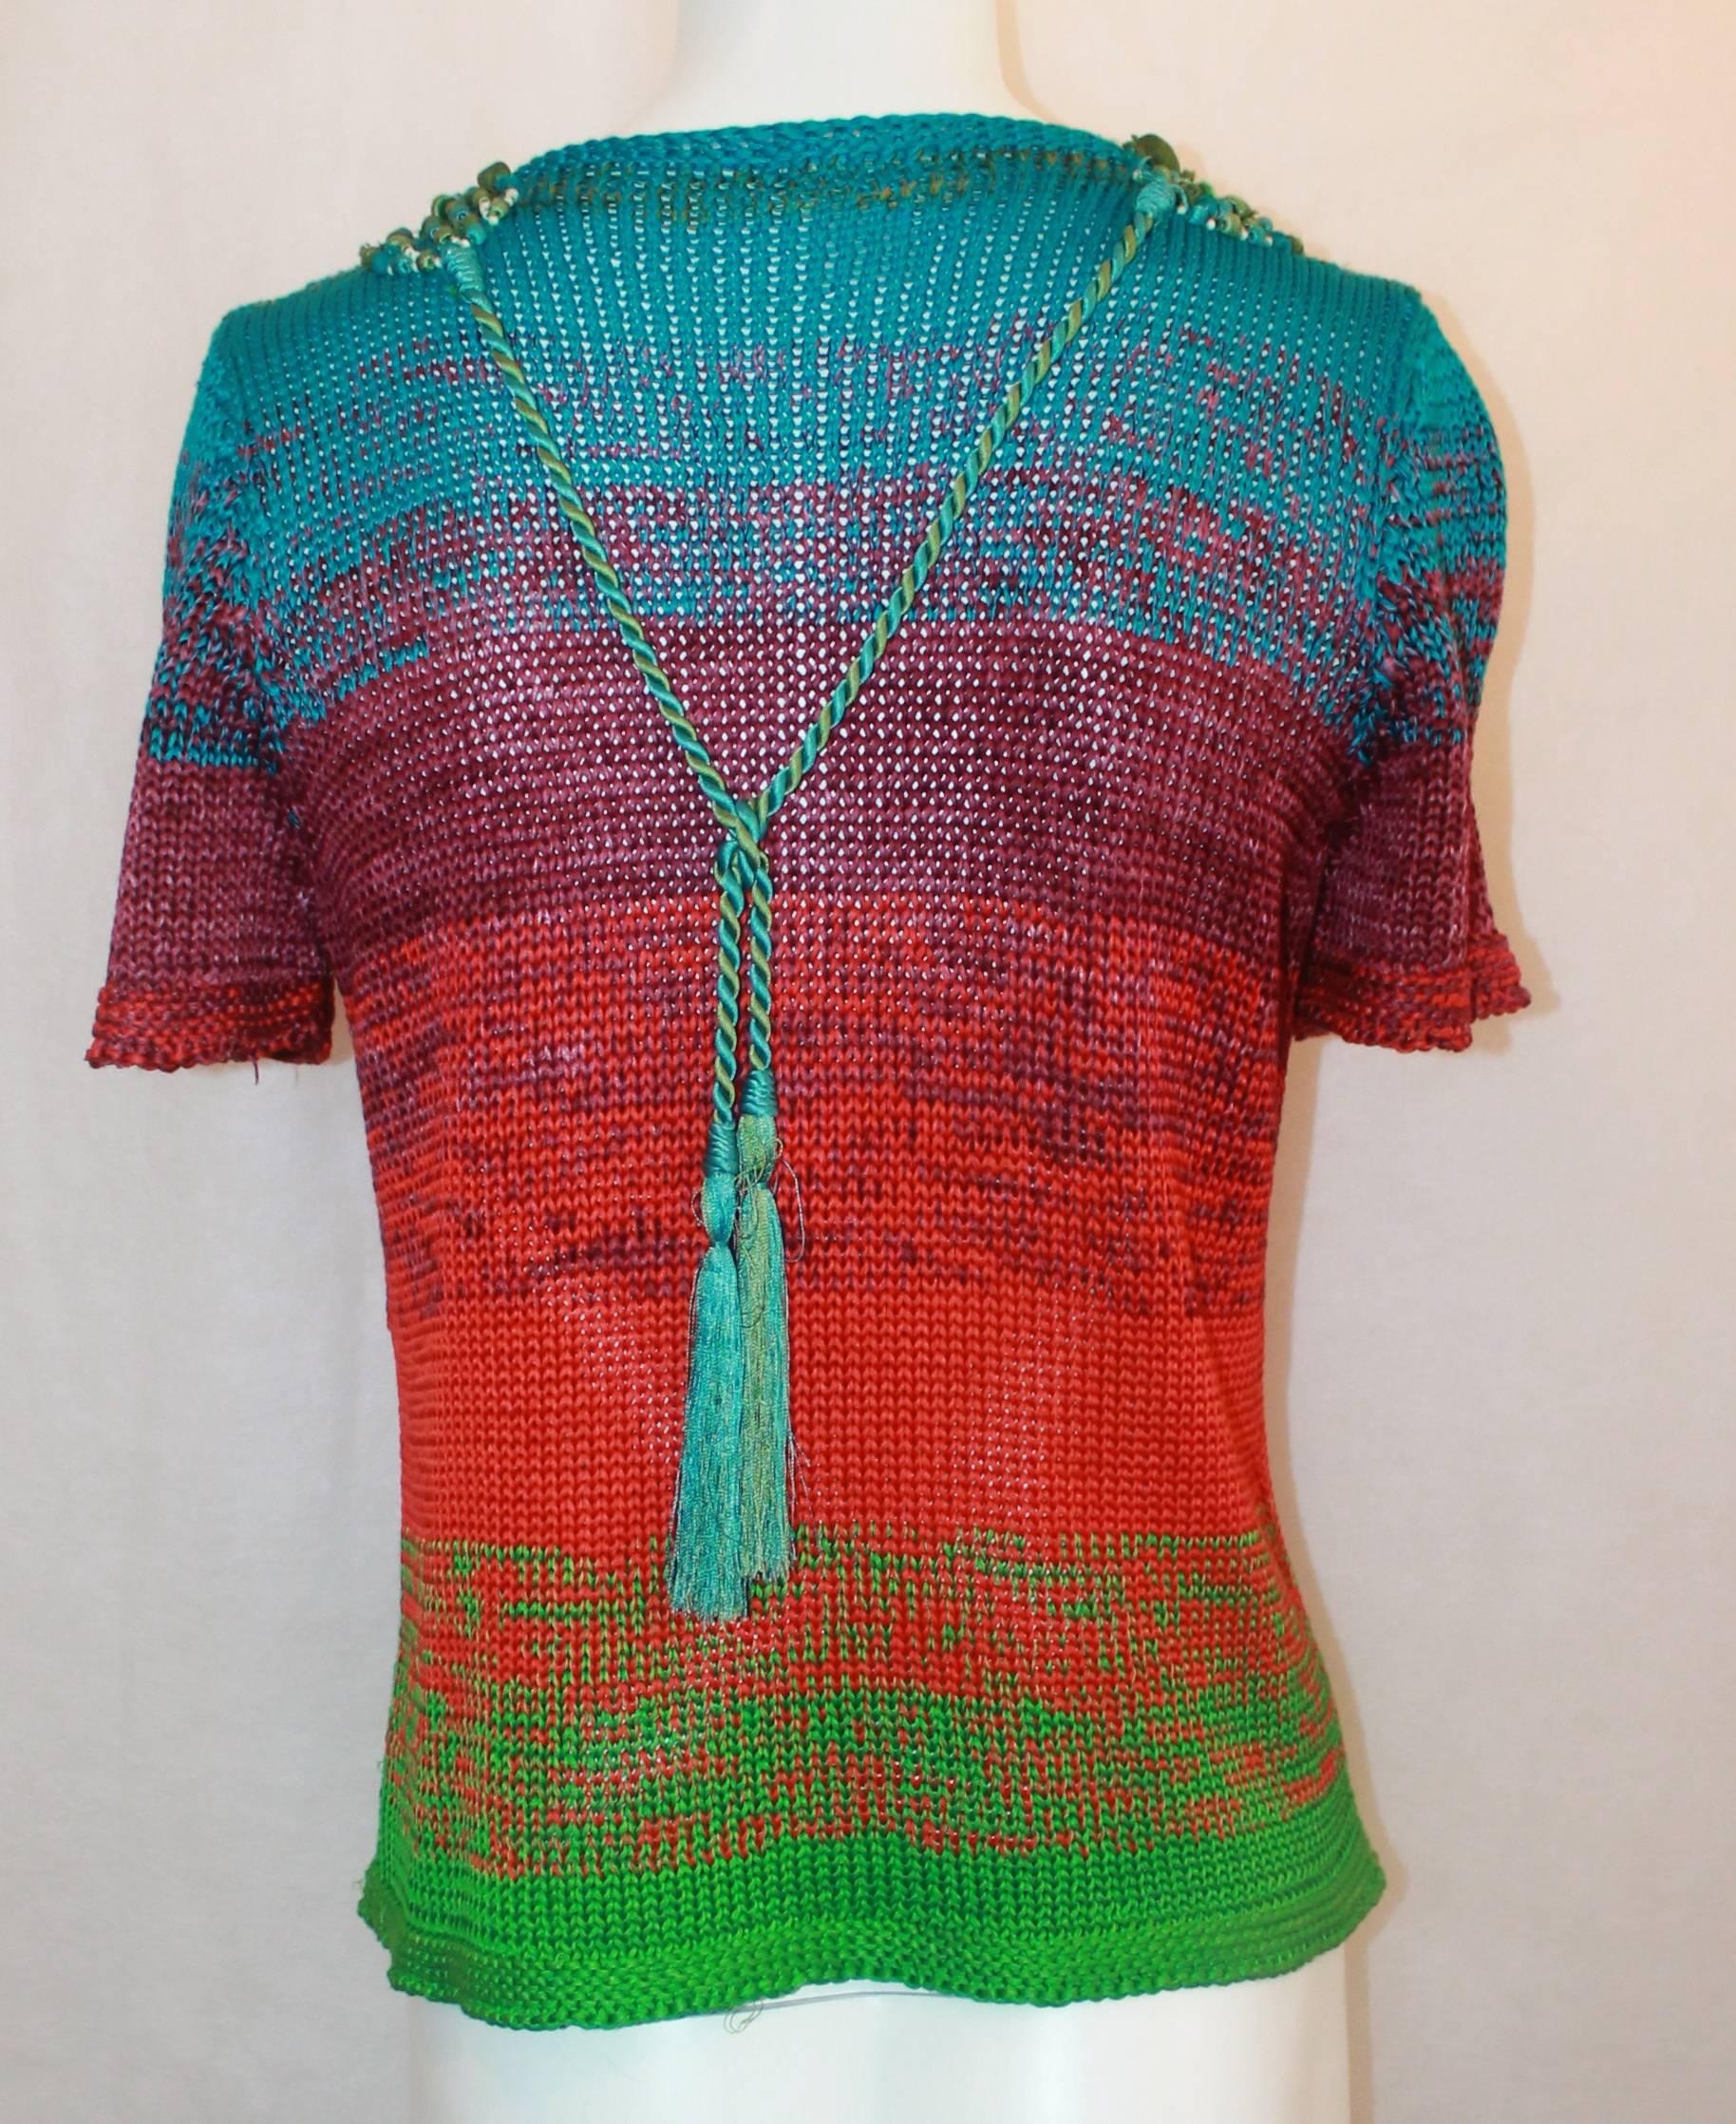 Oscar de la Renta Runway Resort 2009 Multi-color Silk Knit Beaded Top - S In Good Condition For Sale In West Palm Beach, FL